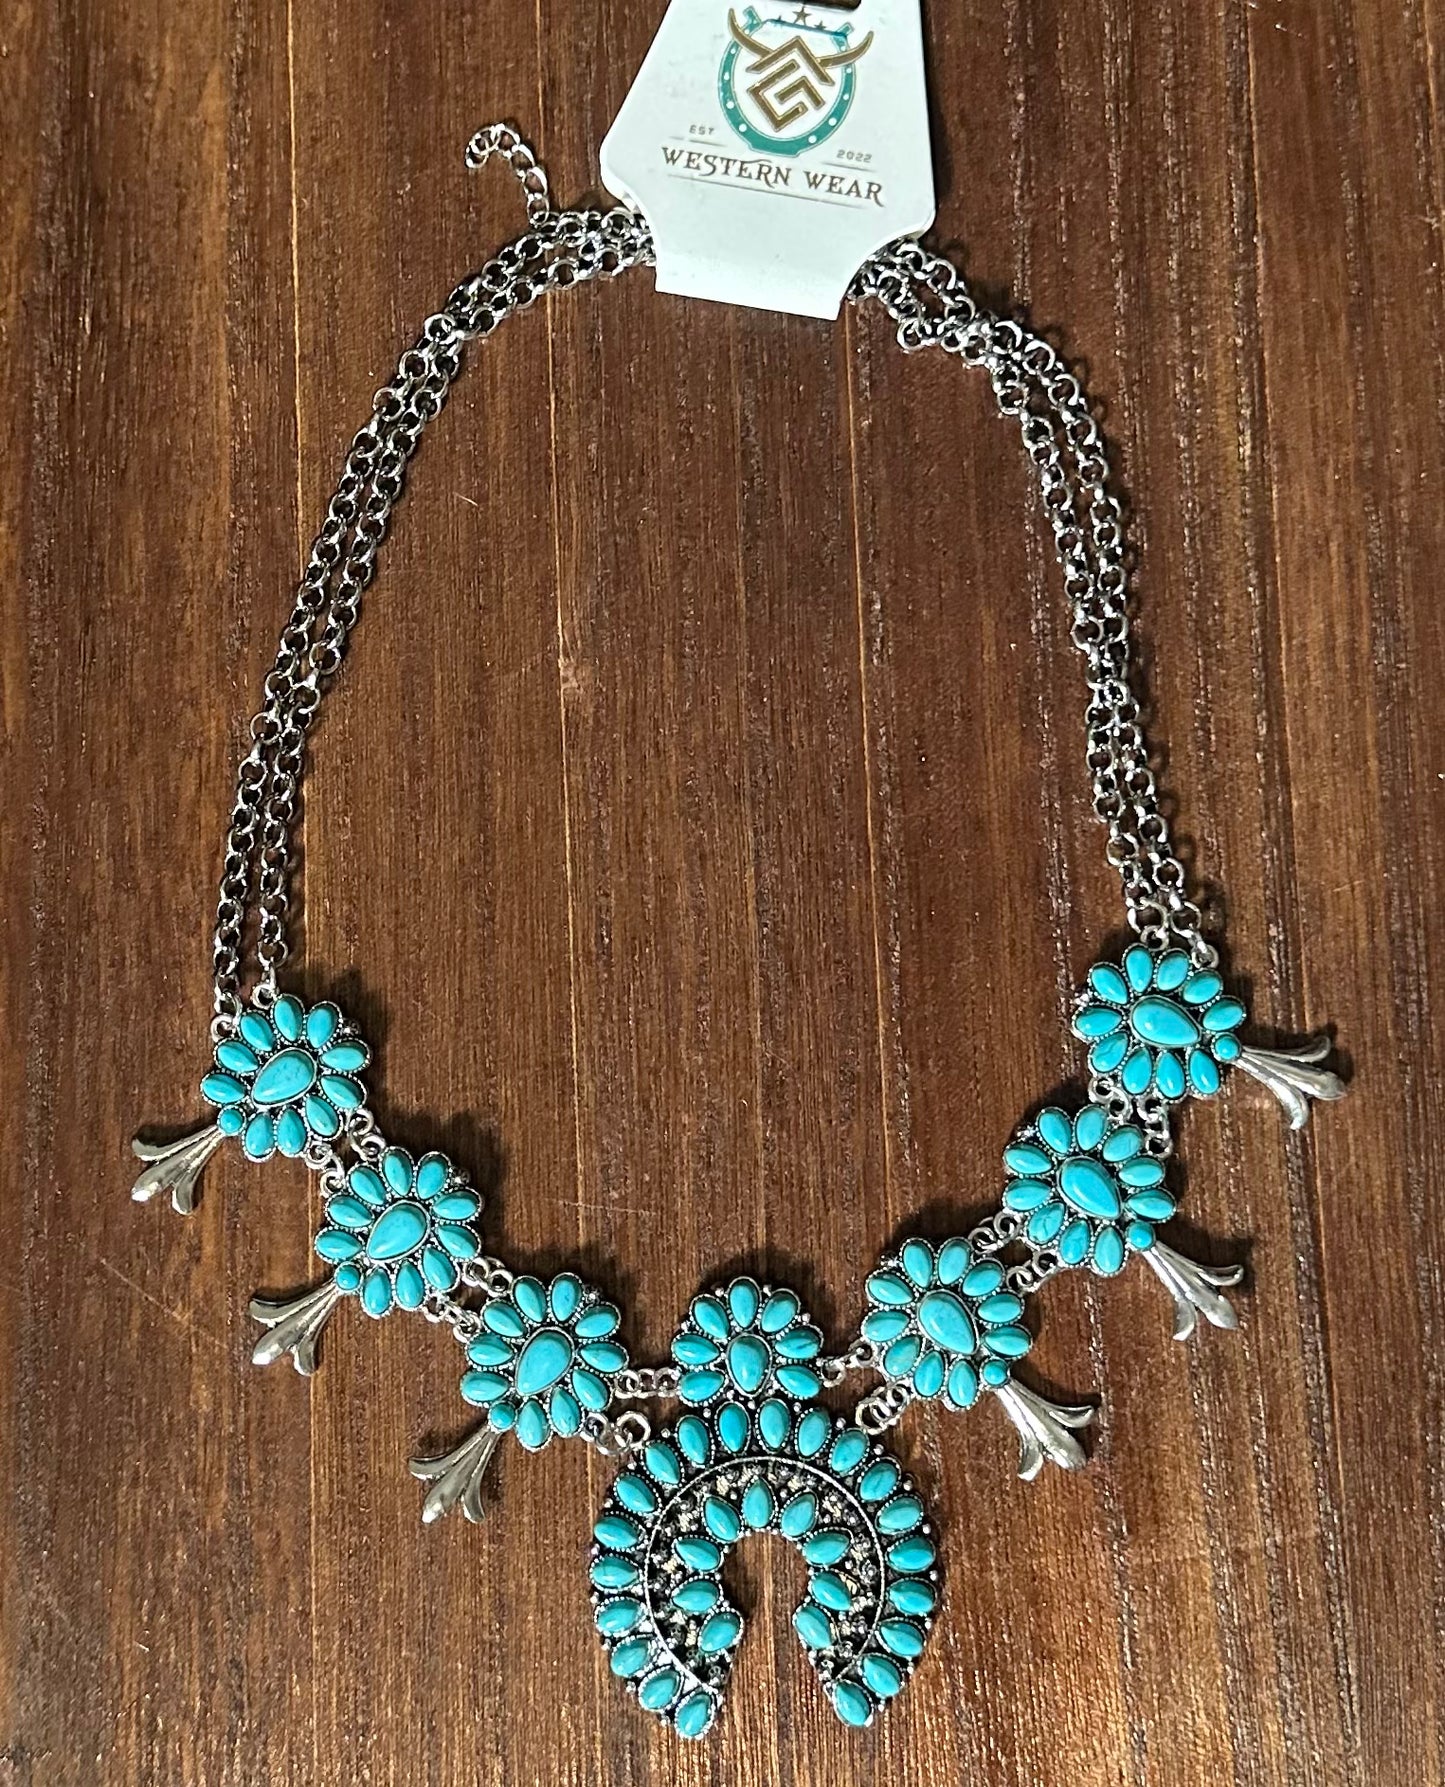 Turquoise flower squash necklace